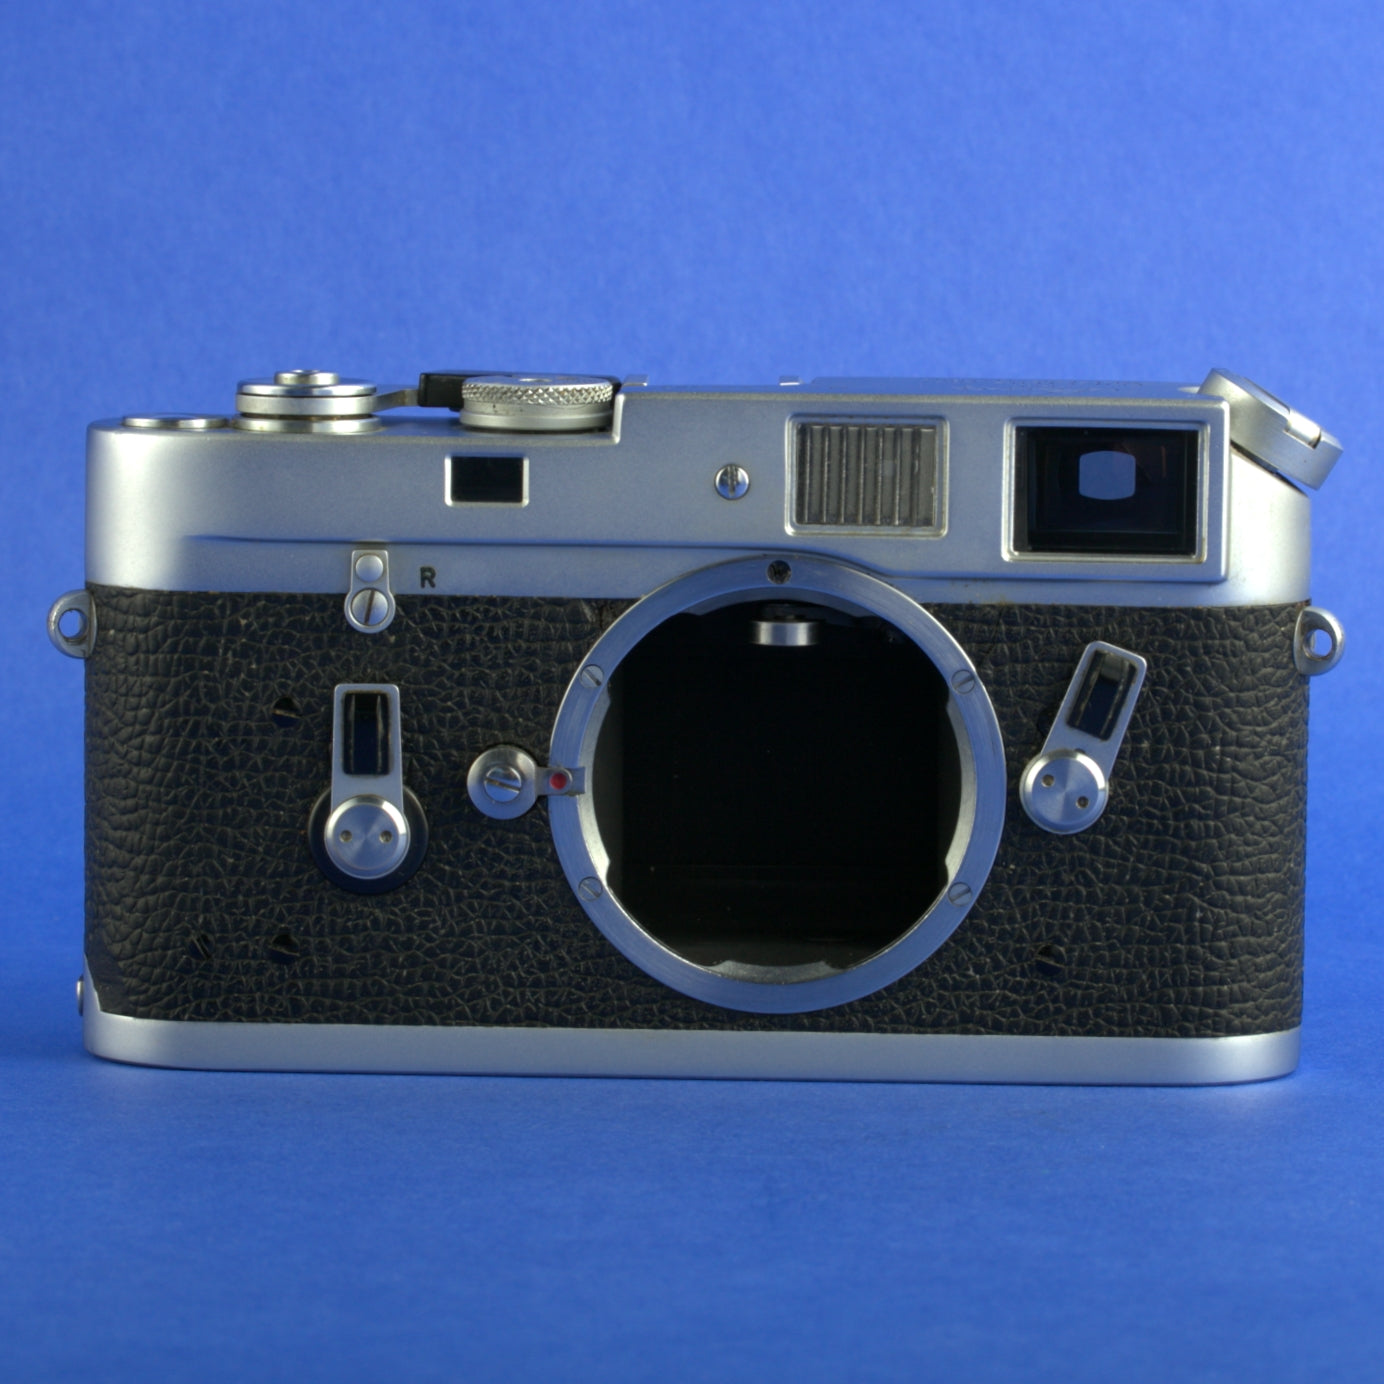 Leica M4 Rangefinder Camera Body